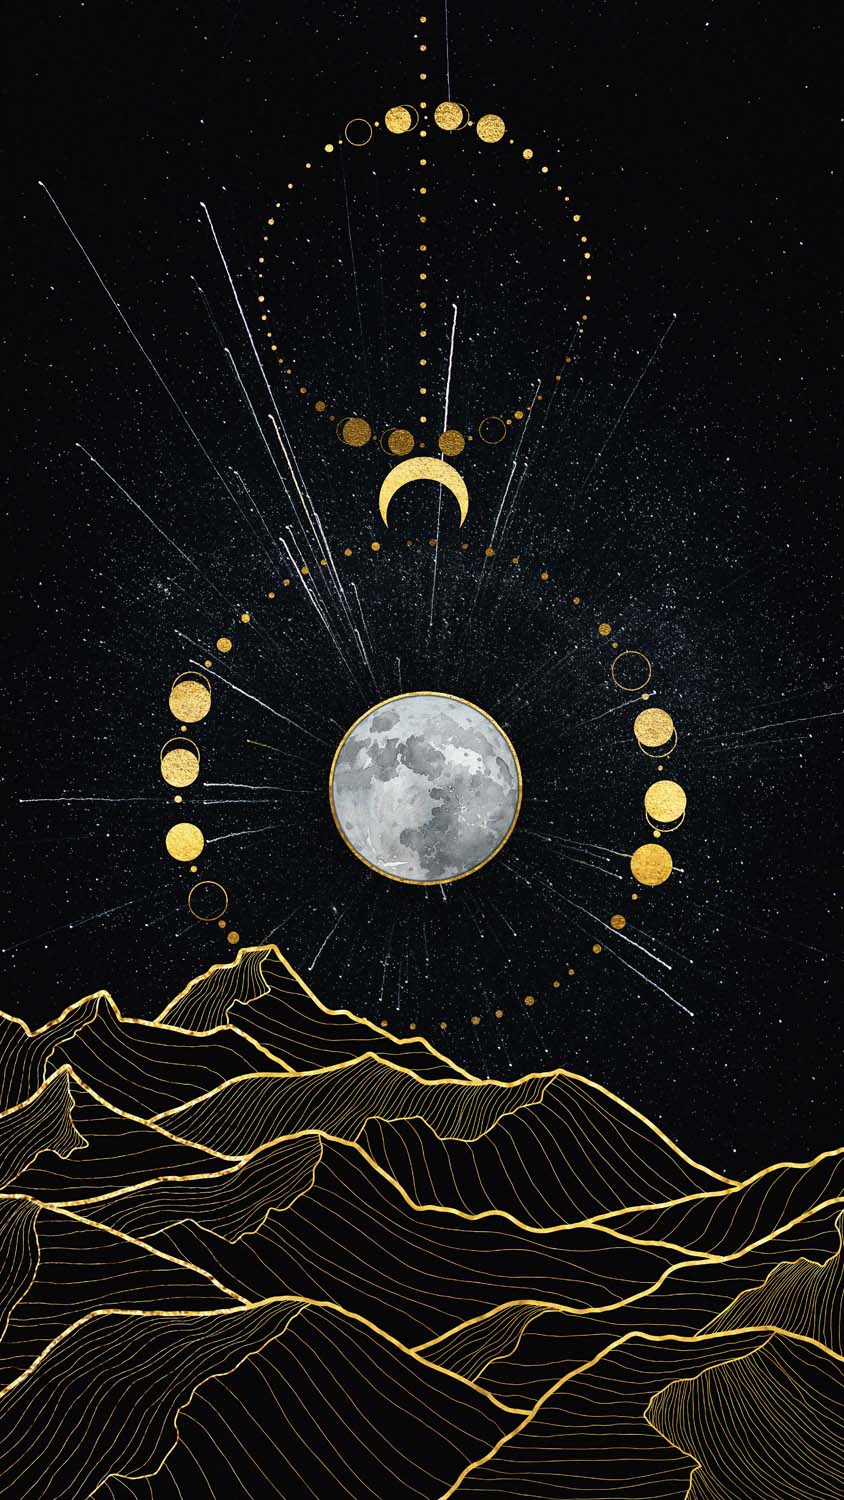 Eclipse Moon iPhone Wallpaper HD